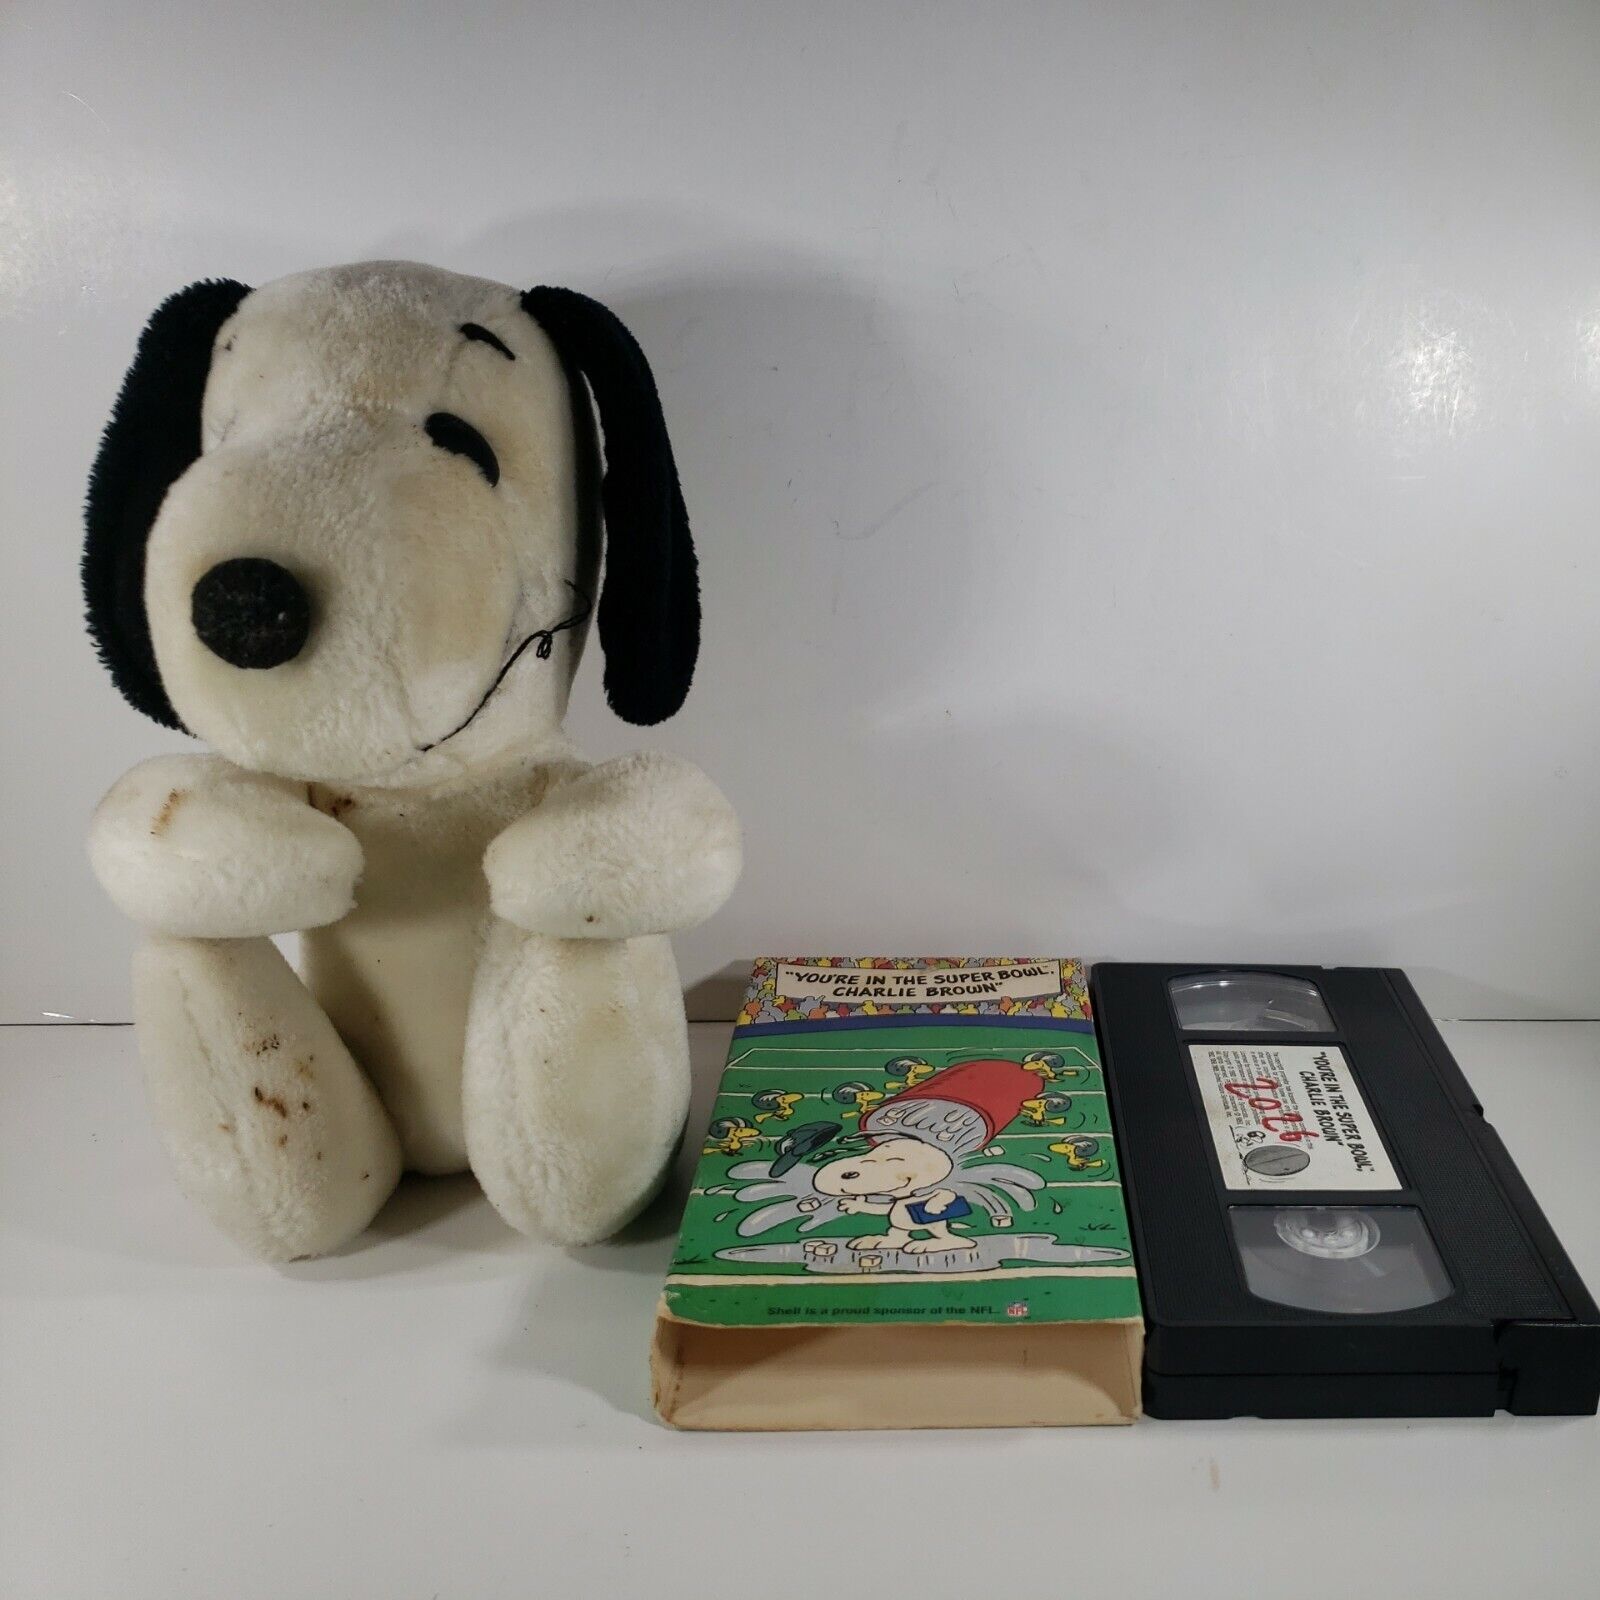 Lot of 2 Vintage Peanuts Snoopy Radio Shack With AM Radio Plush & VHS #8-61